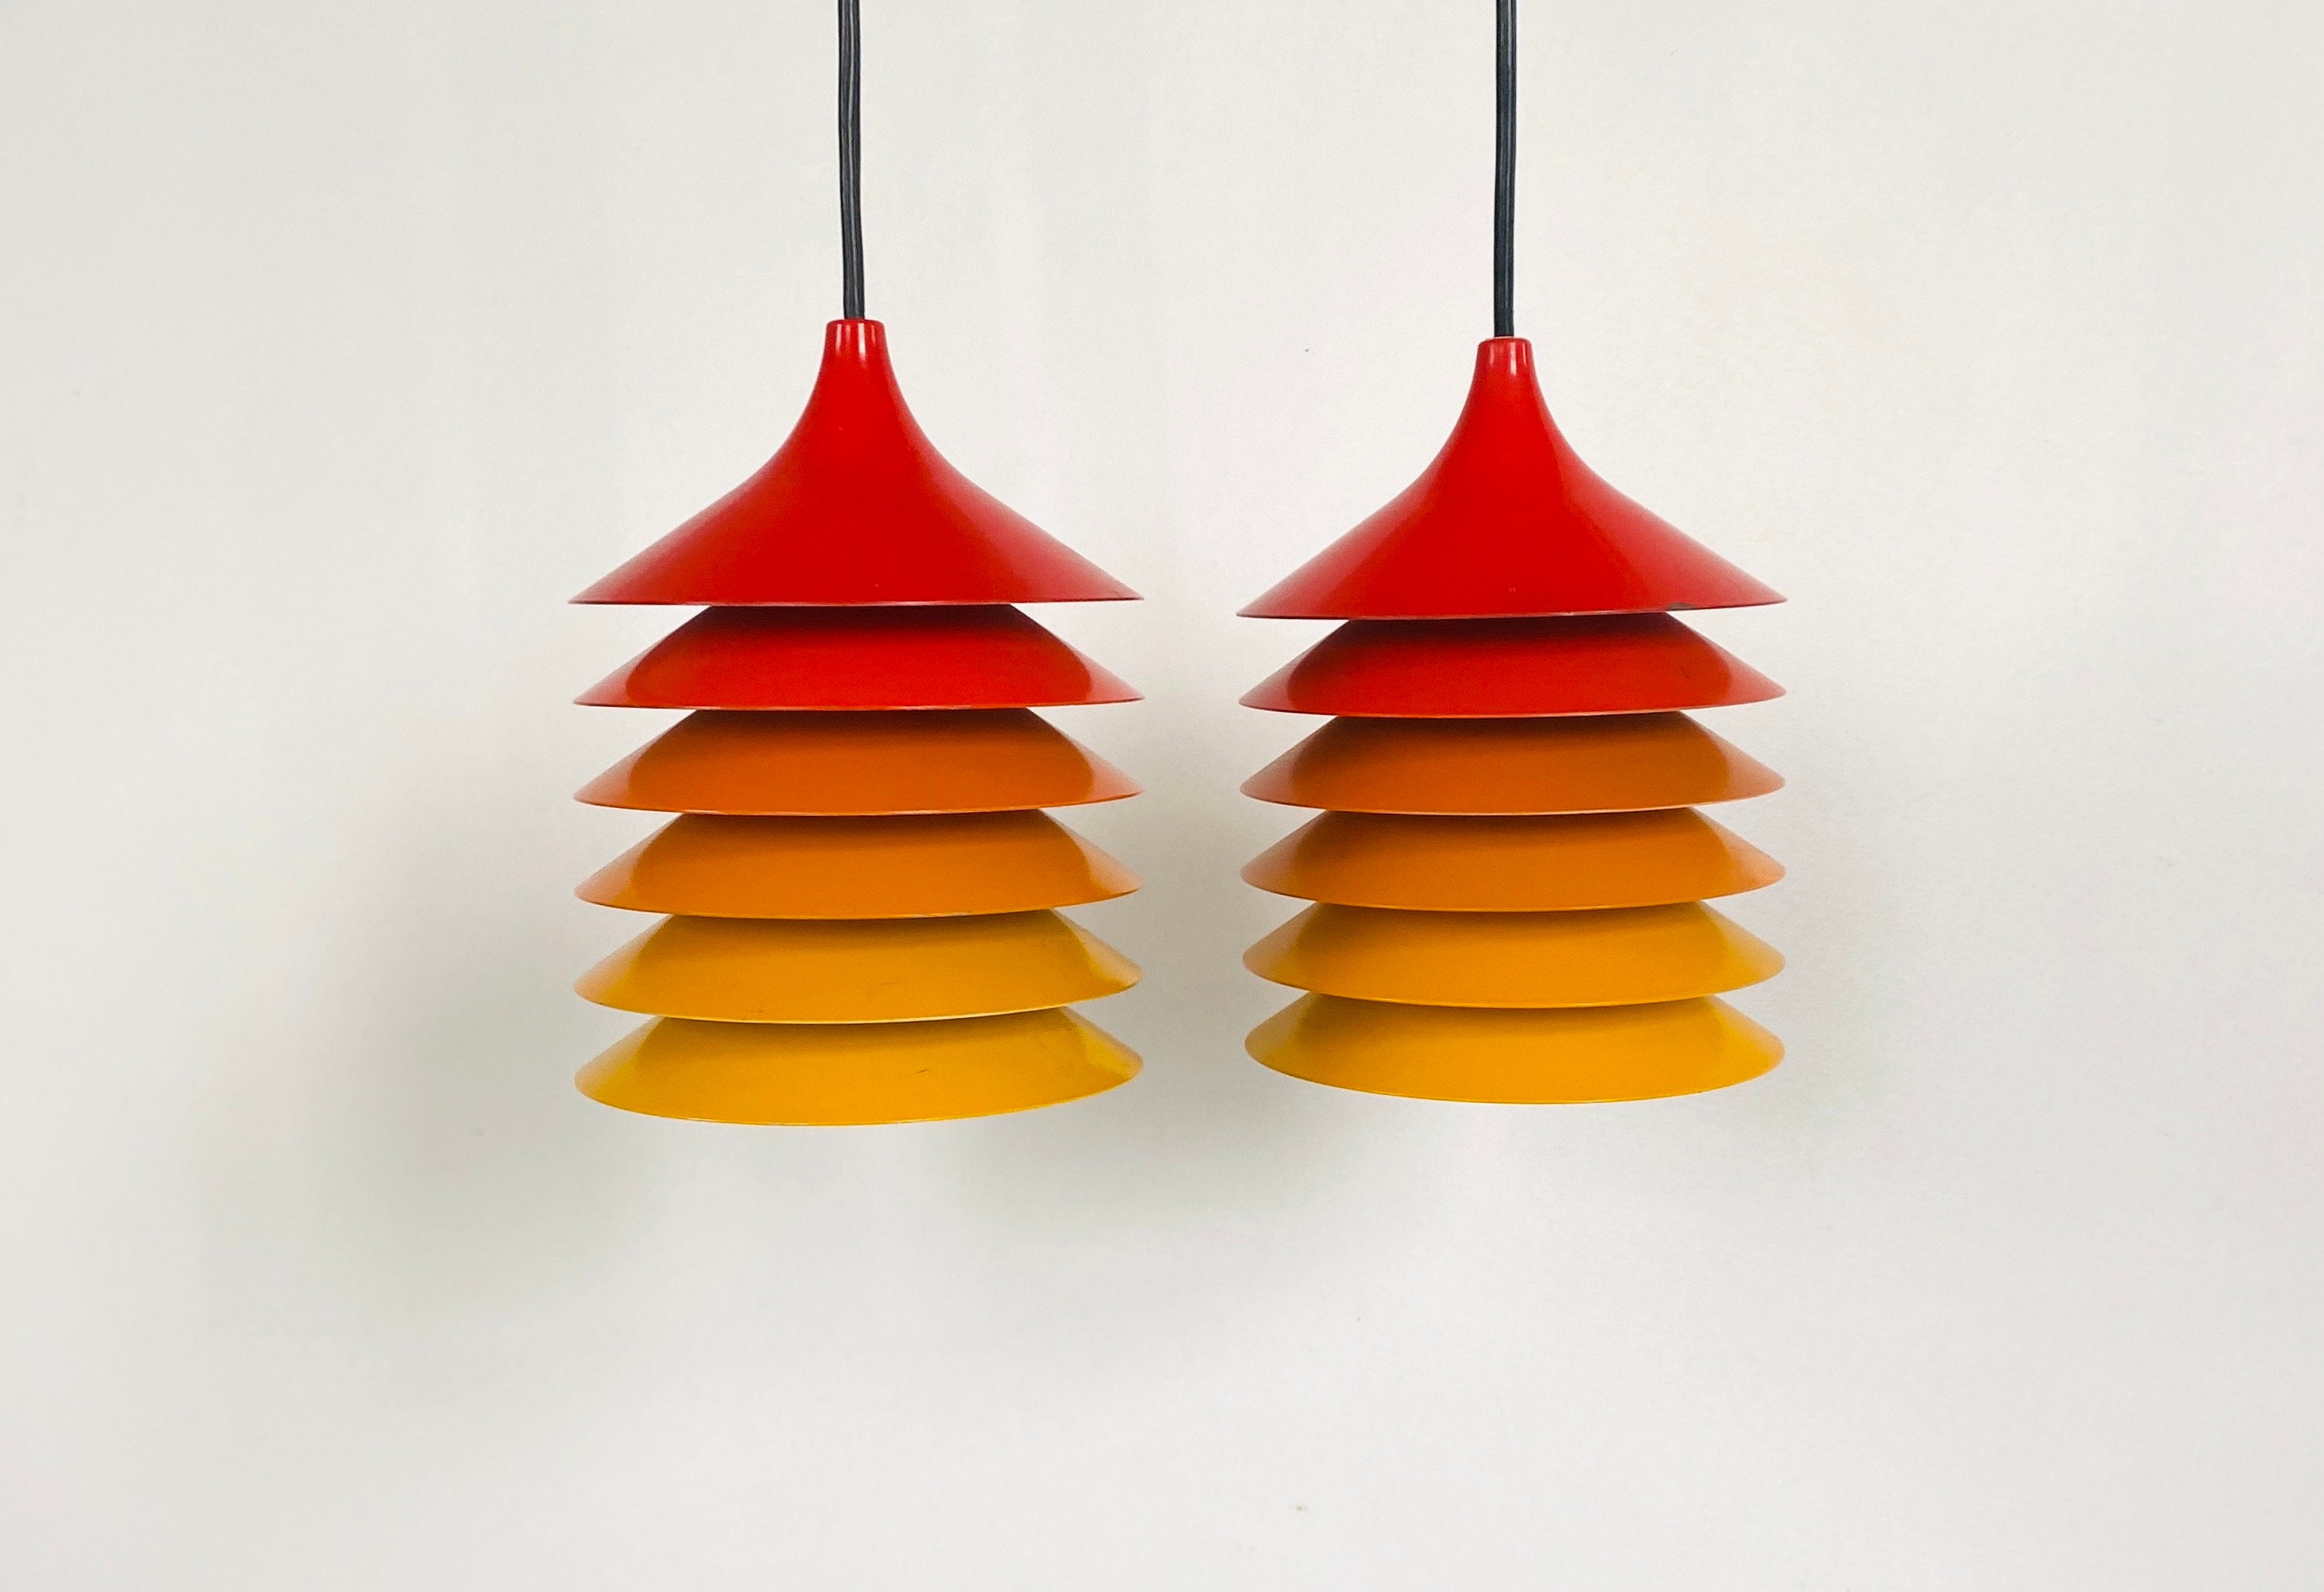 Ikea Knappa pendant light - retro style for under £15 - Retro to Go